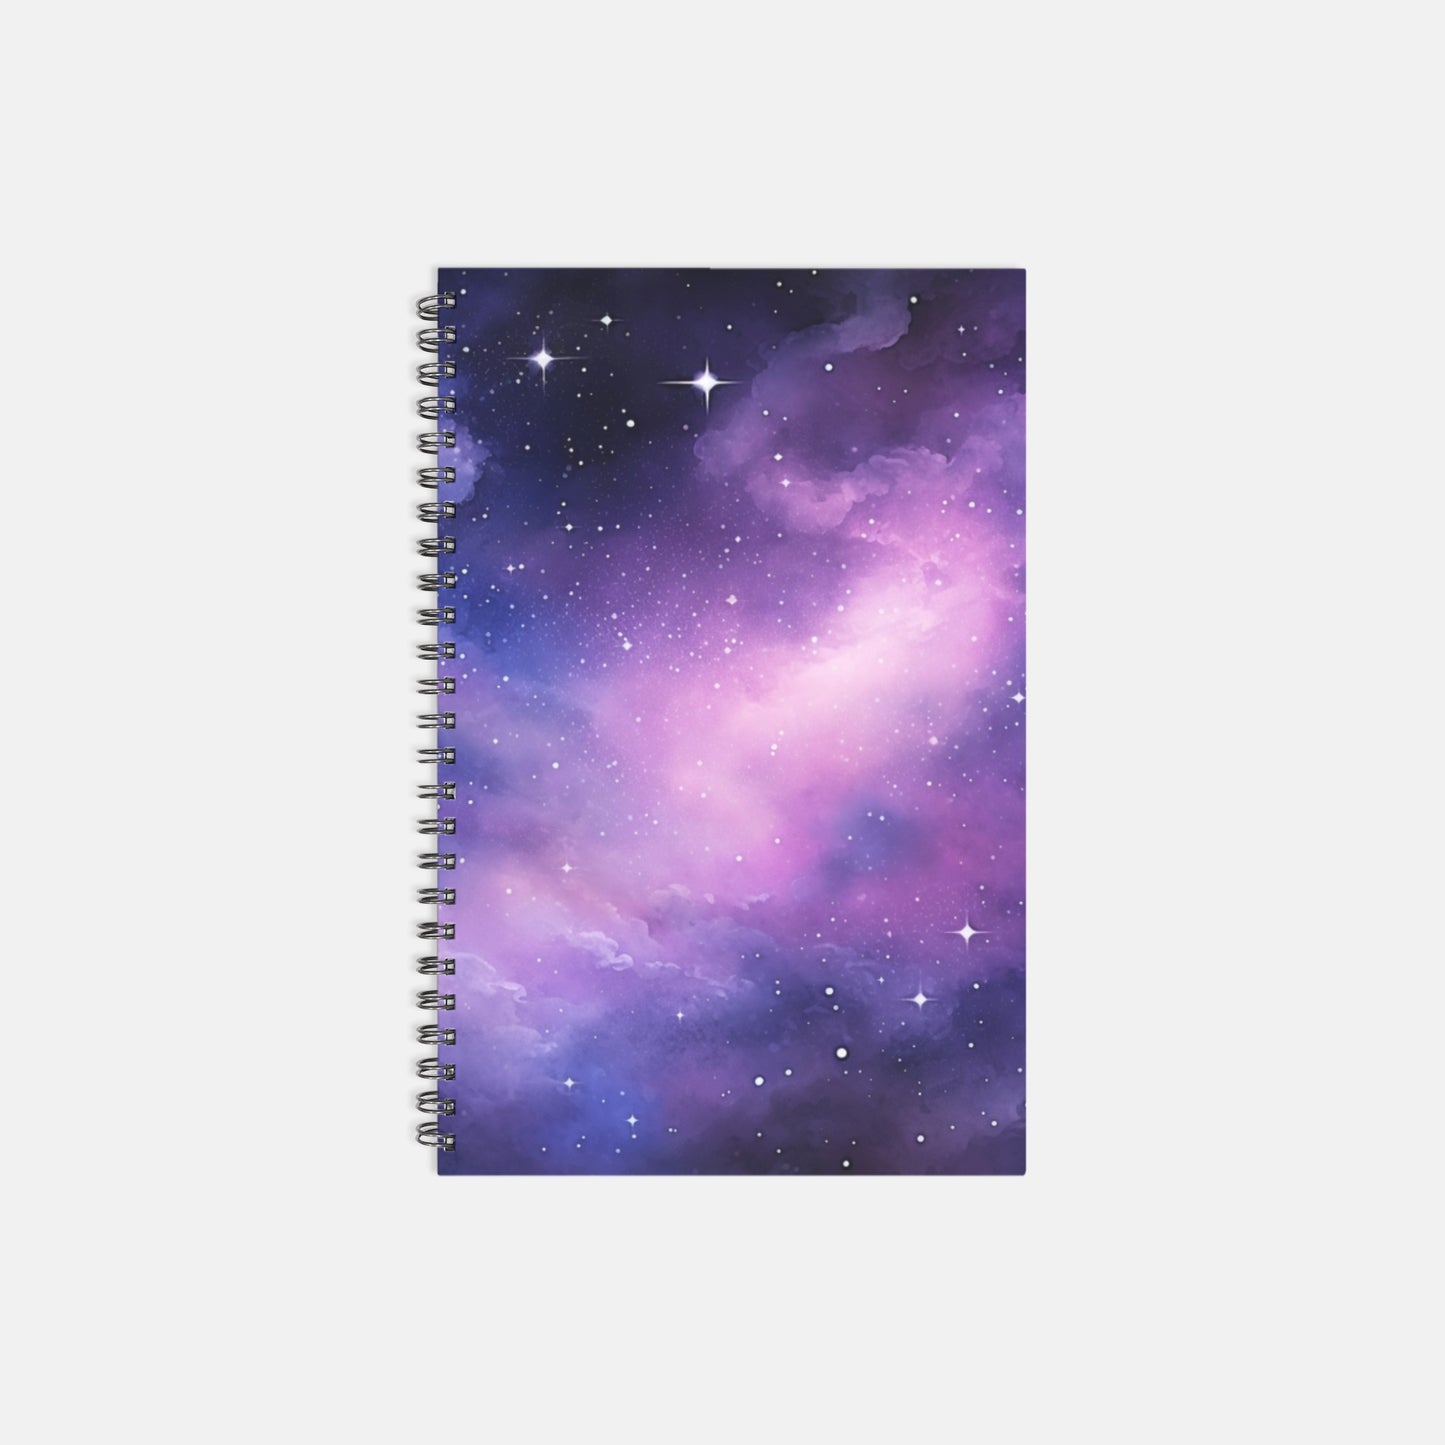 Notebook Softcover Spiral 5.5 x 8.5 - Night Sky Wonder